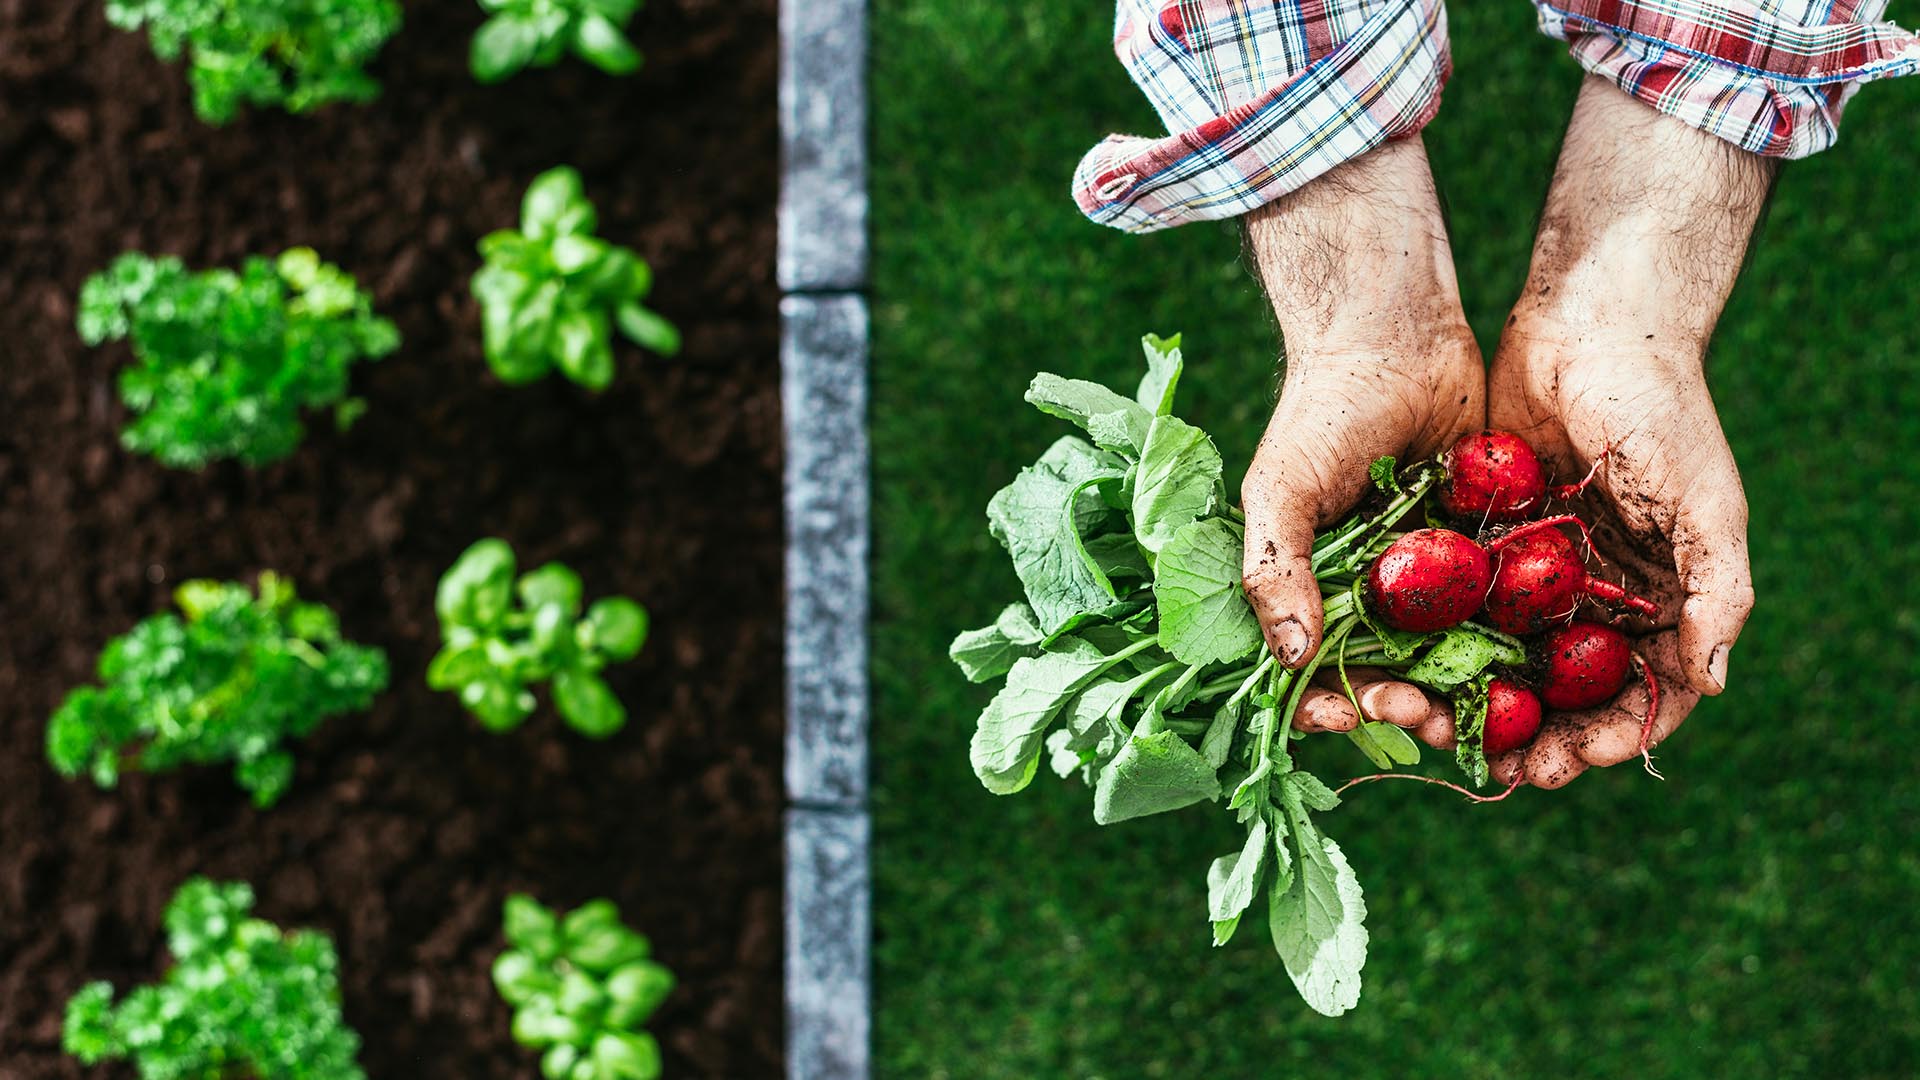 Choosing Organic Farming - Advantages and Disadvantages